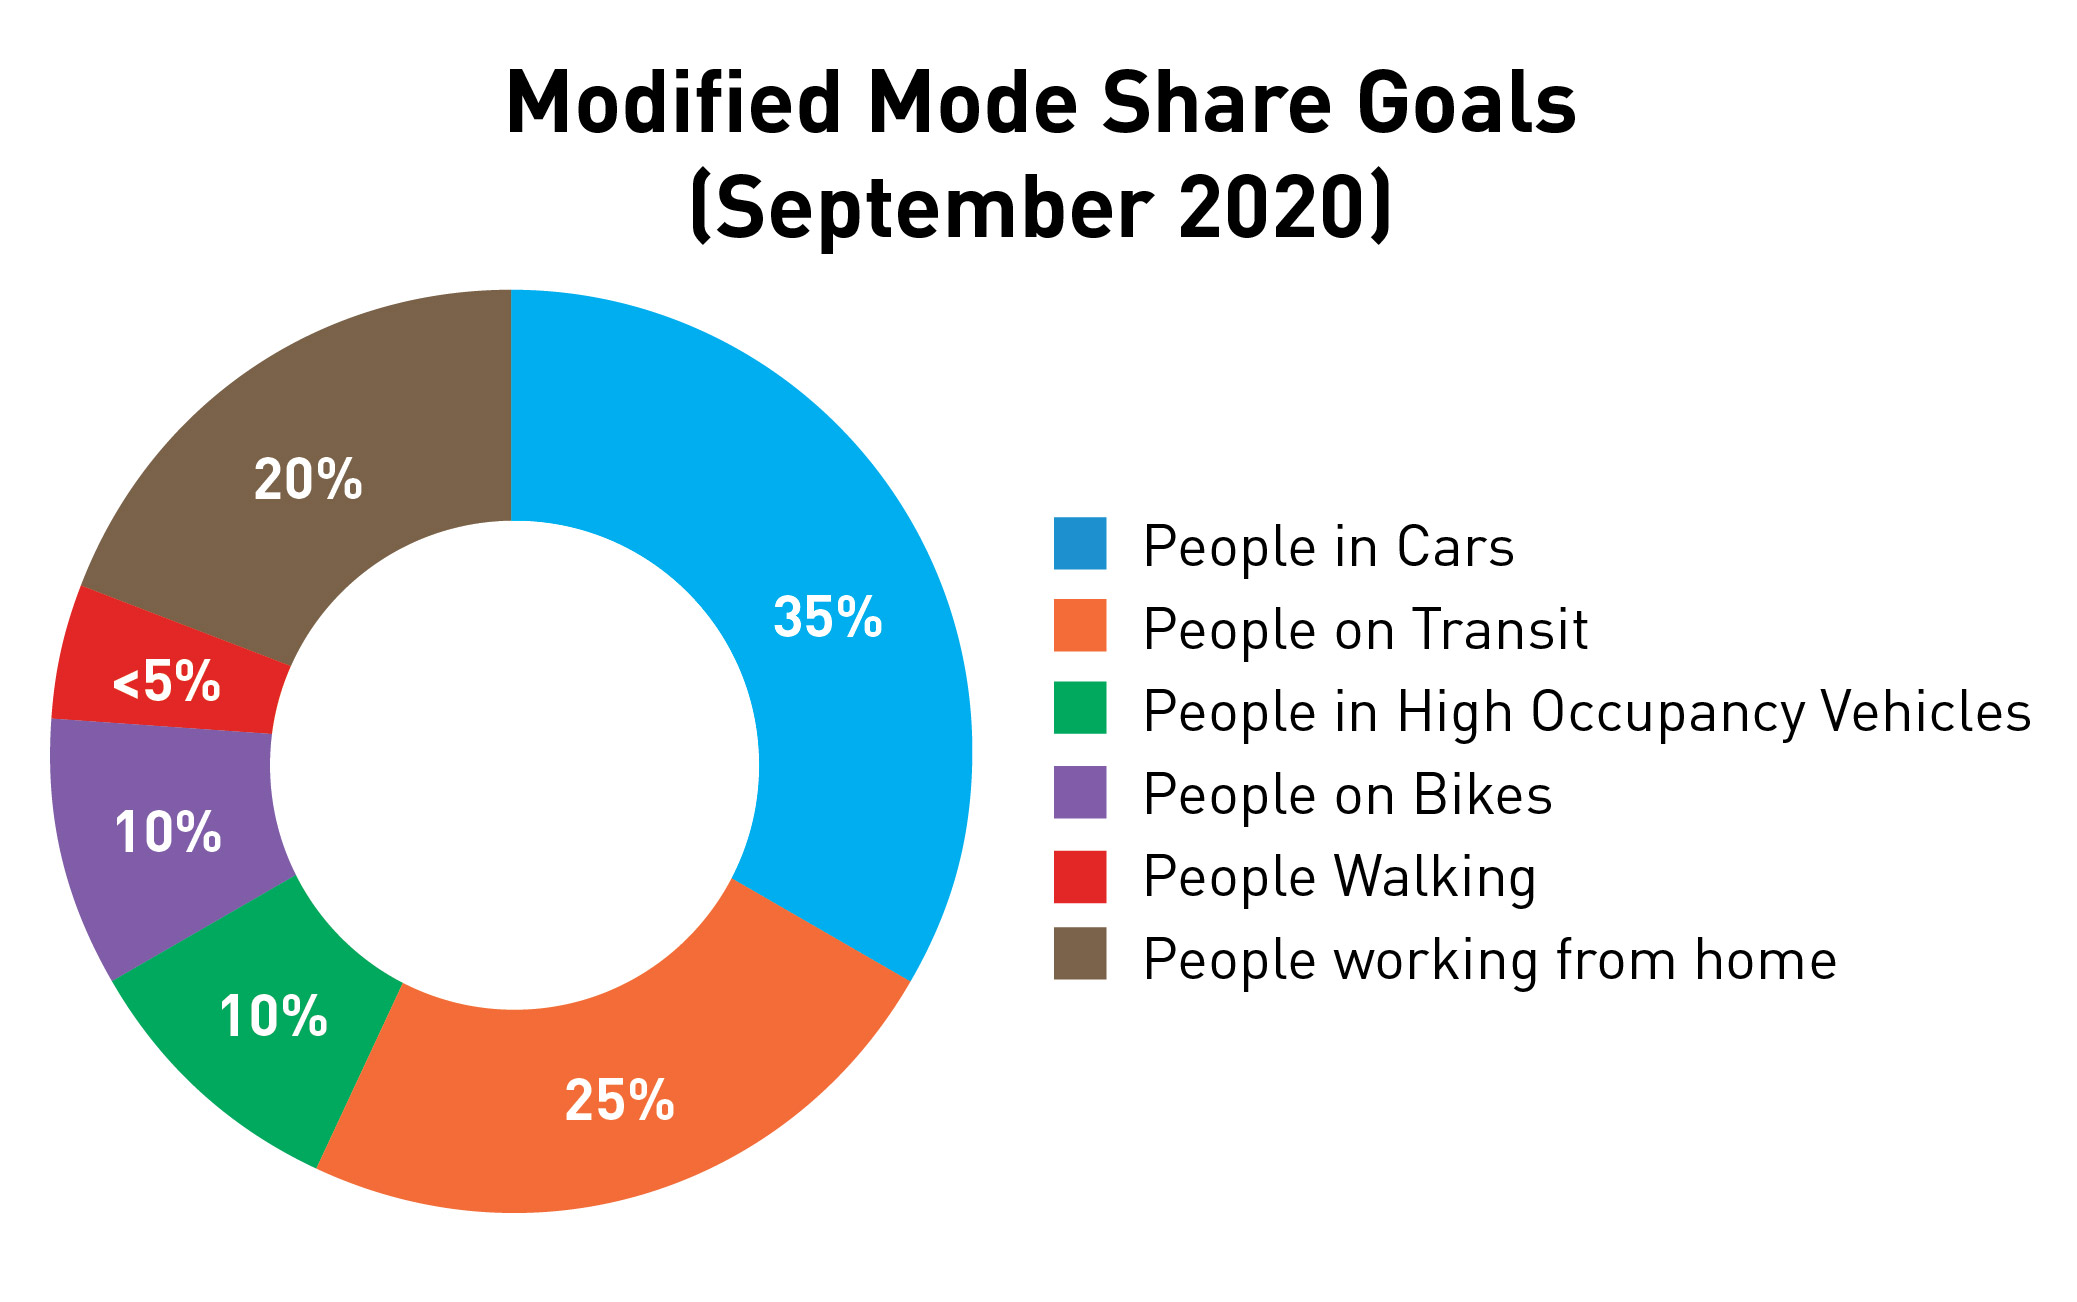 Modified mode share goals